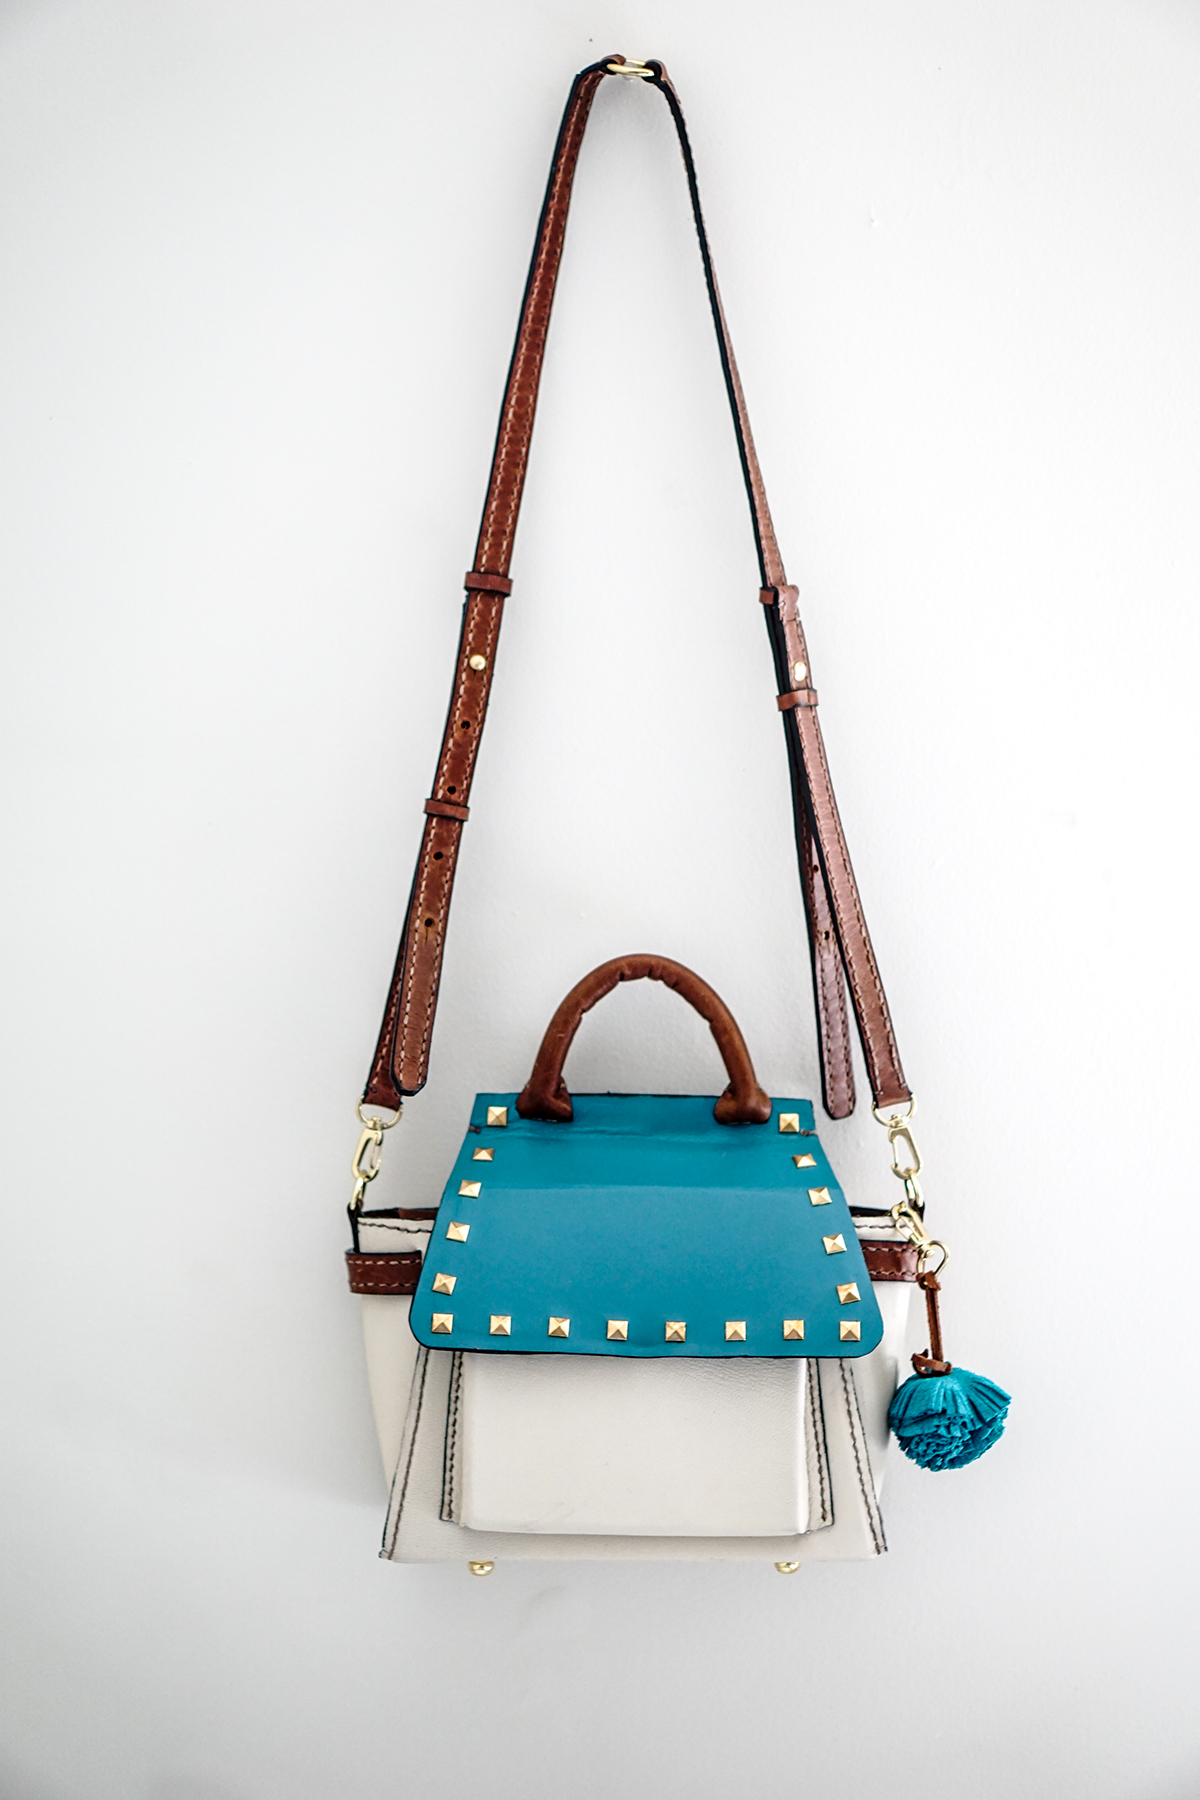 Adobe Portfolio accessory design handbag backpack convertible Rivet hand stitch leather